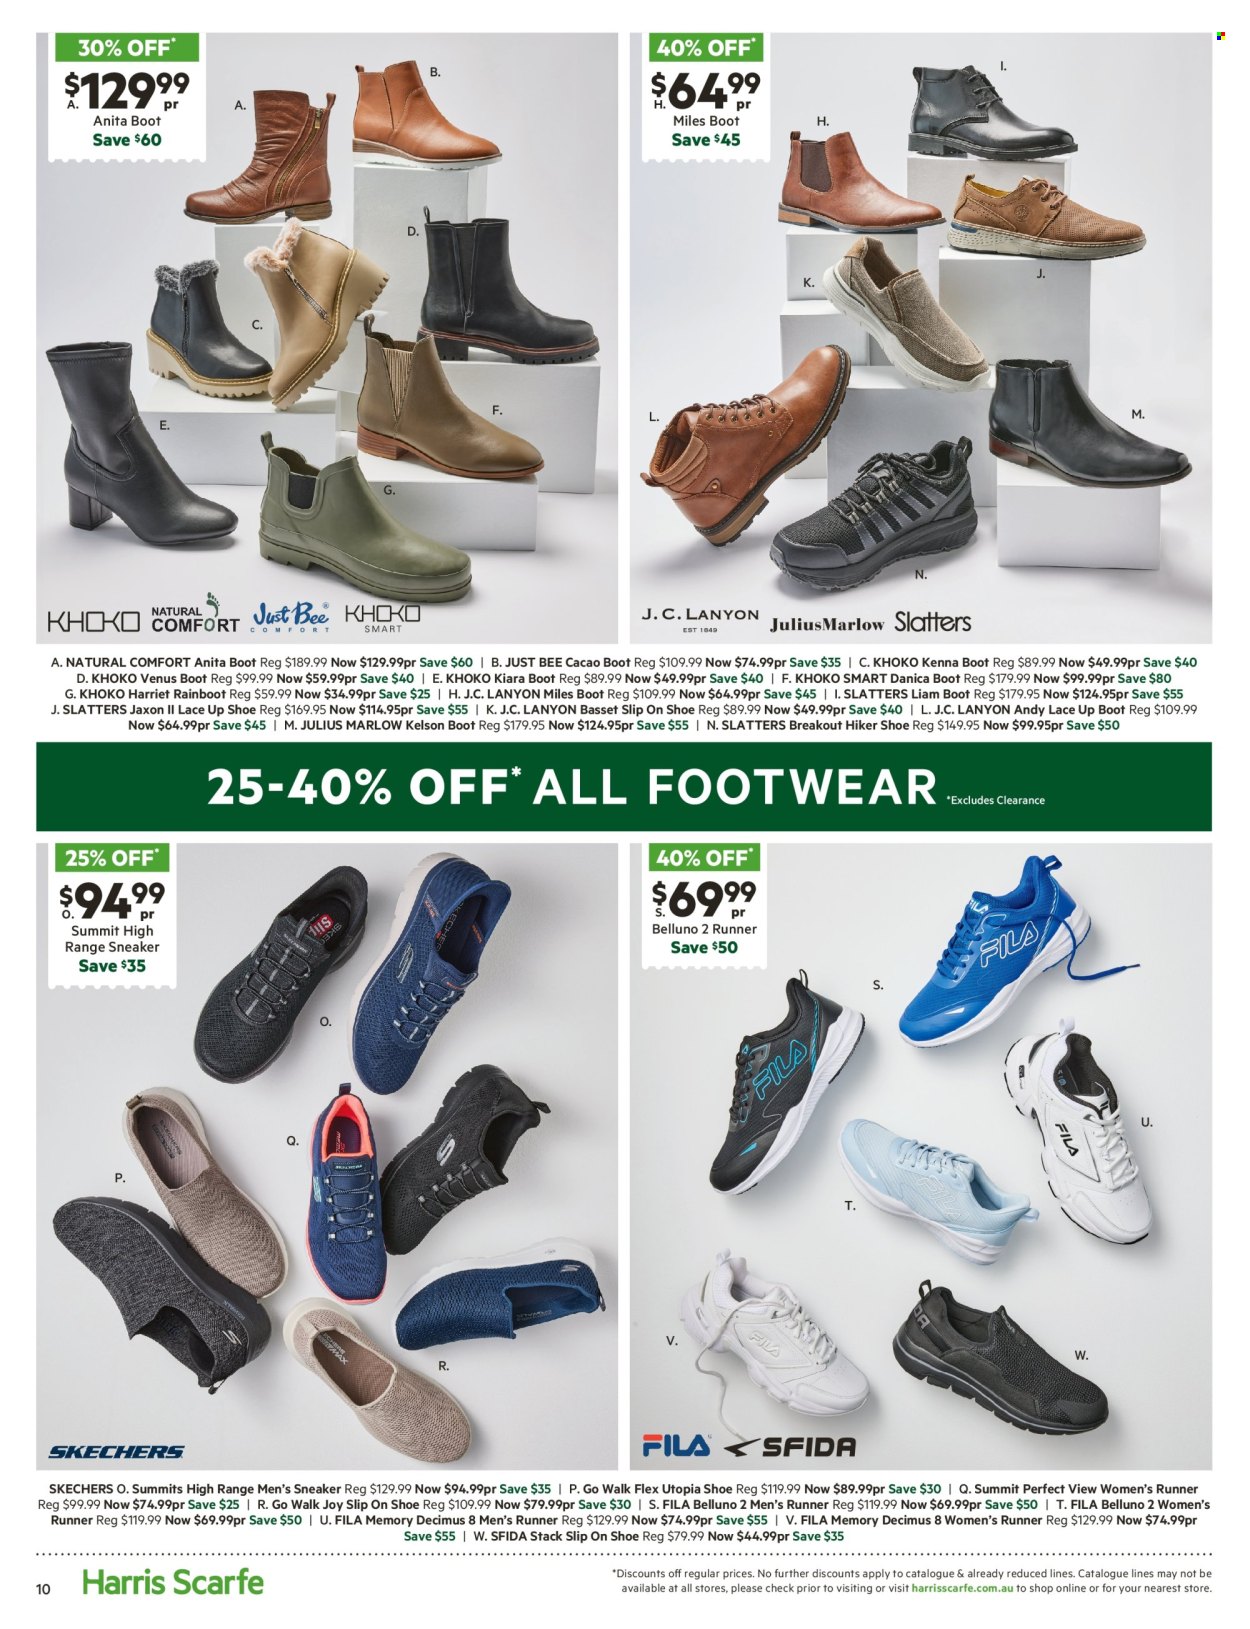 thumbnail - Harris Scarfe Catalogue - Sales products - boots, Fila, shoes, sneakers, Skechers, Khoko, Julius Marlow, Slatters. Page 10.